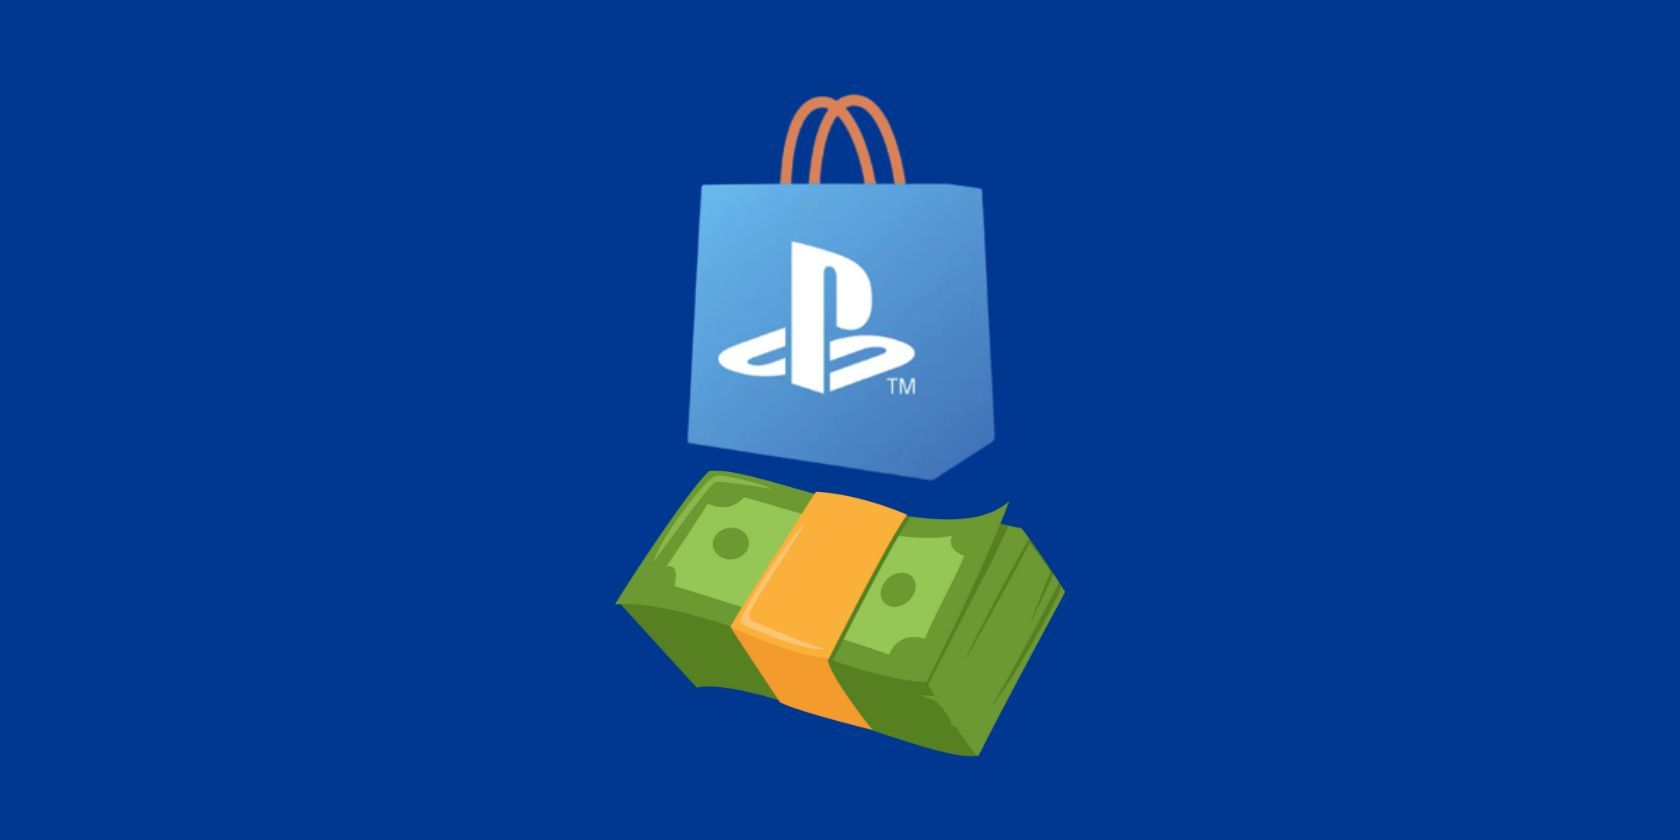 The PlayStation Store logo with a cartoon dollar bill underneath